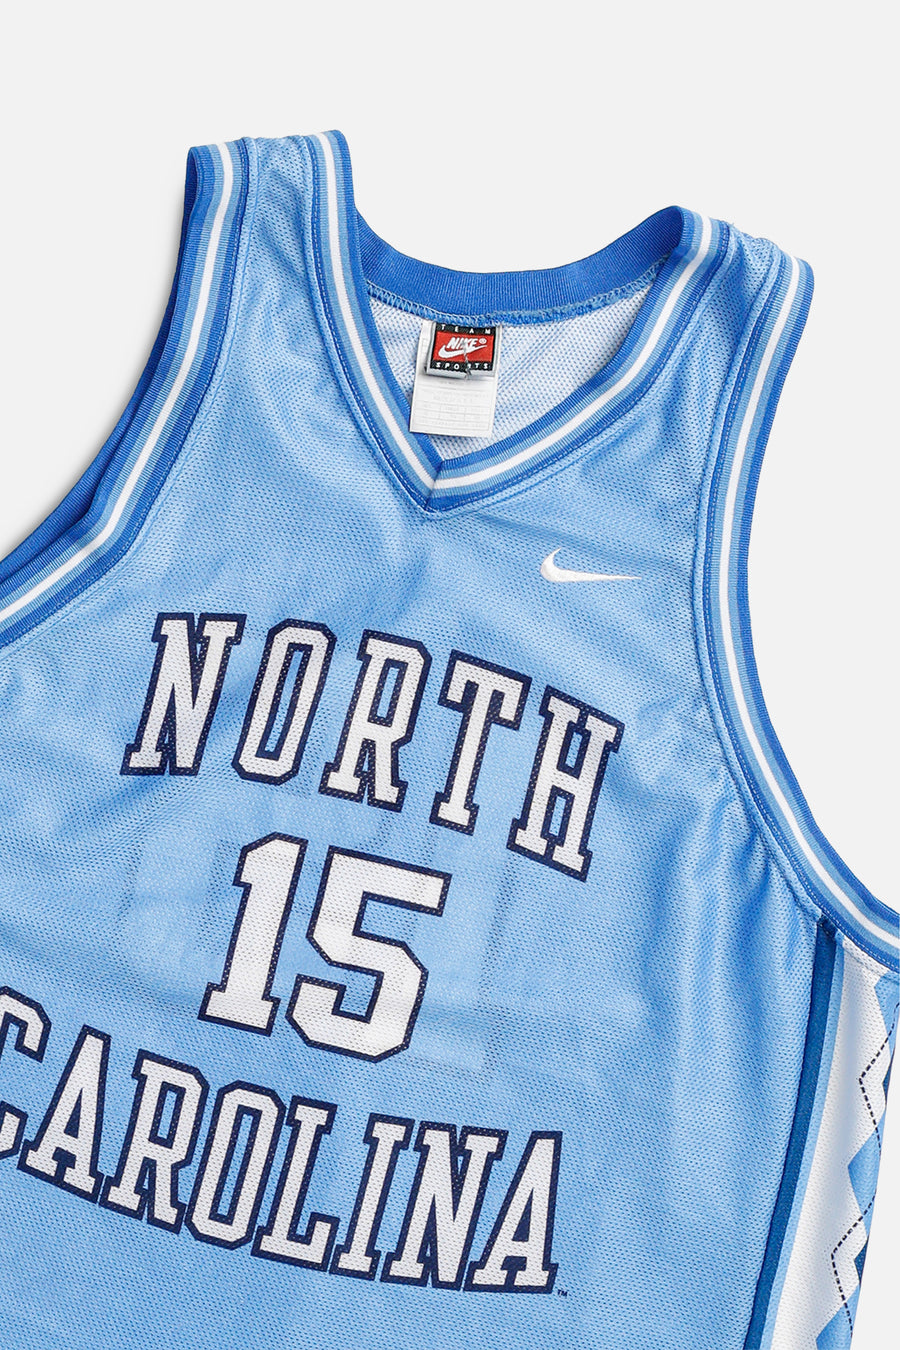 Vintage North Carolina NCAA Jersey - XL